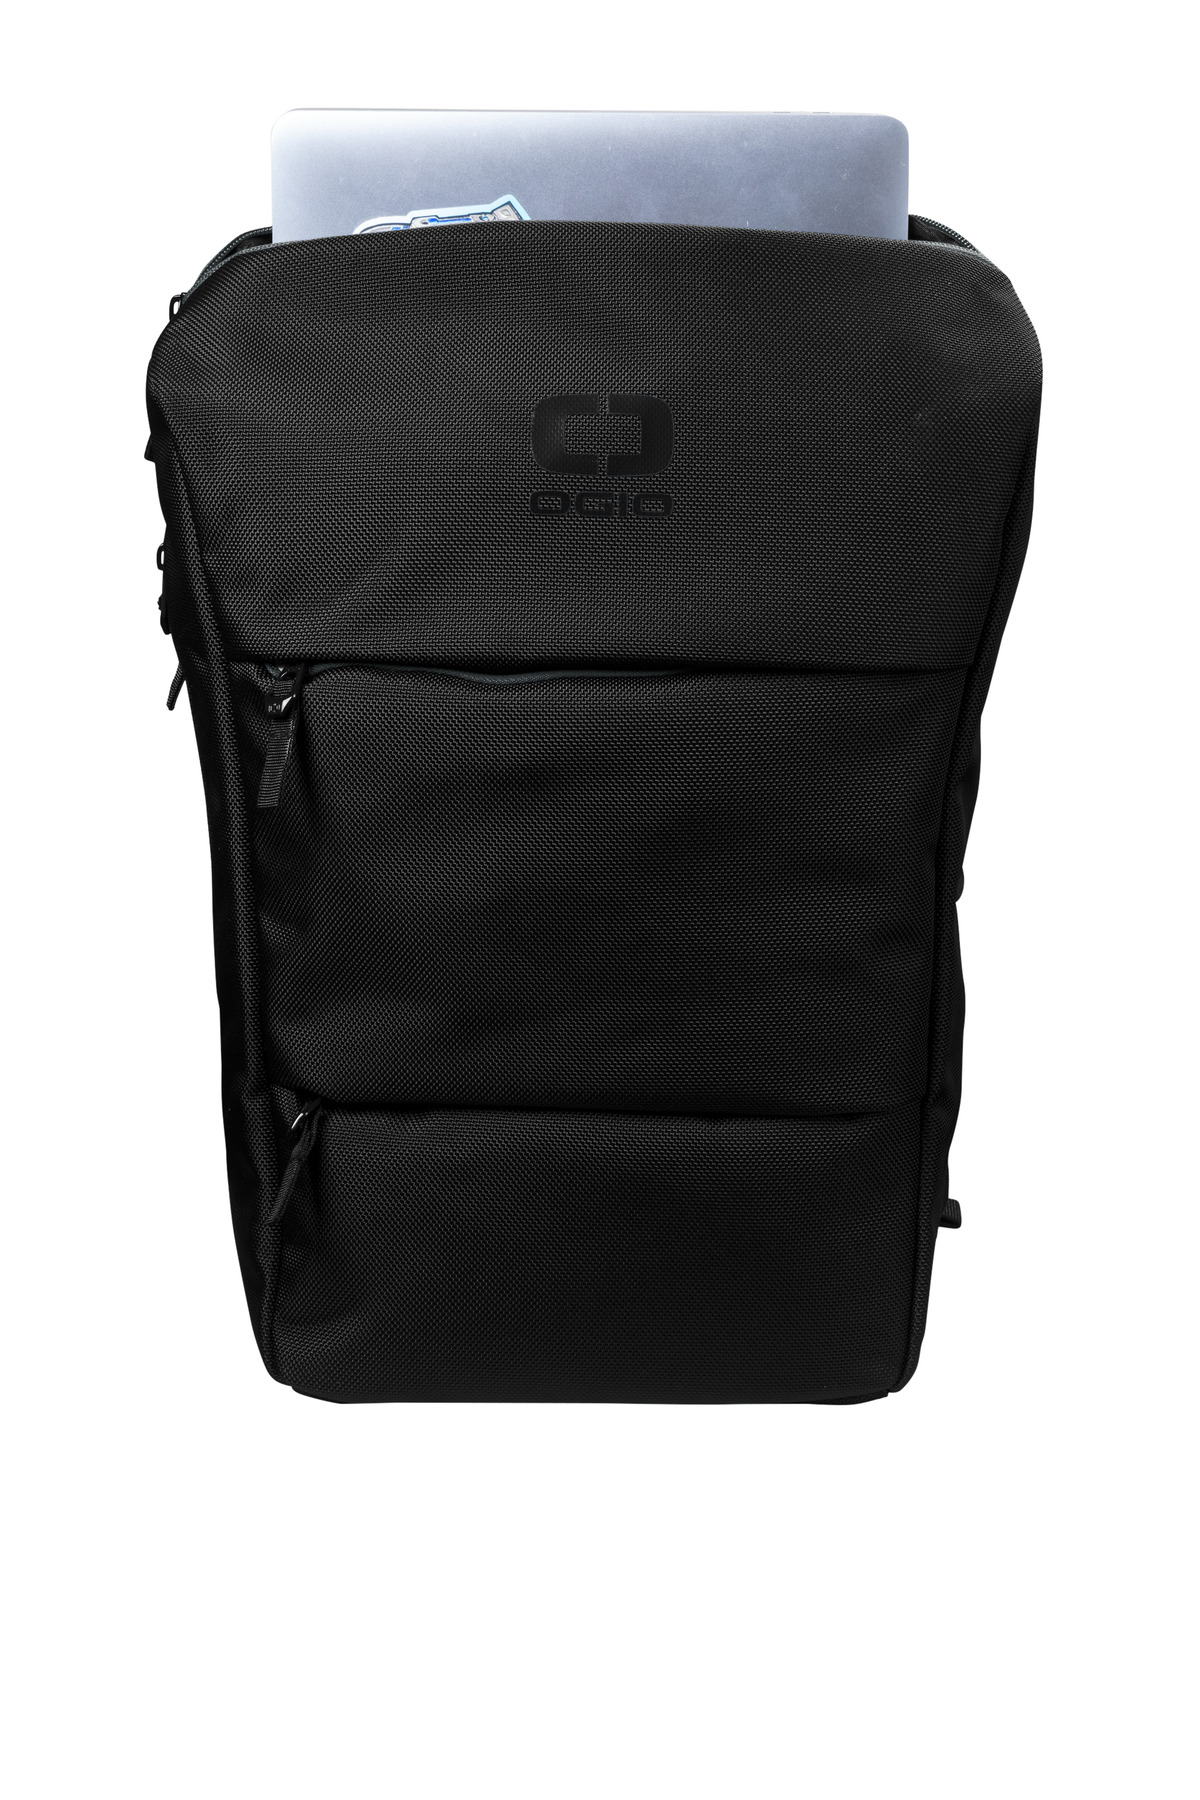 OGIO Sprint Pack 92001